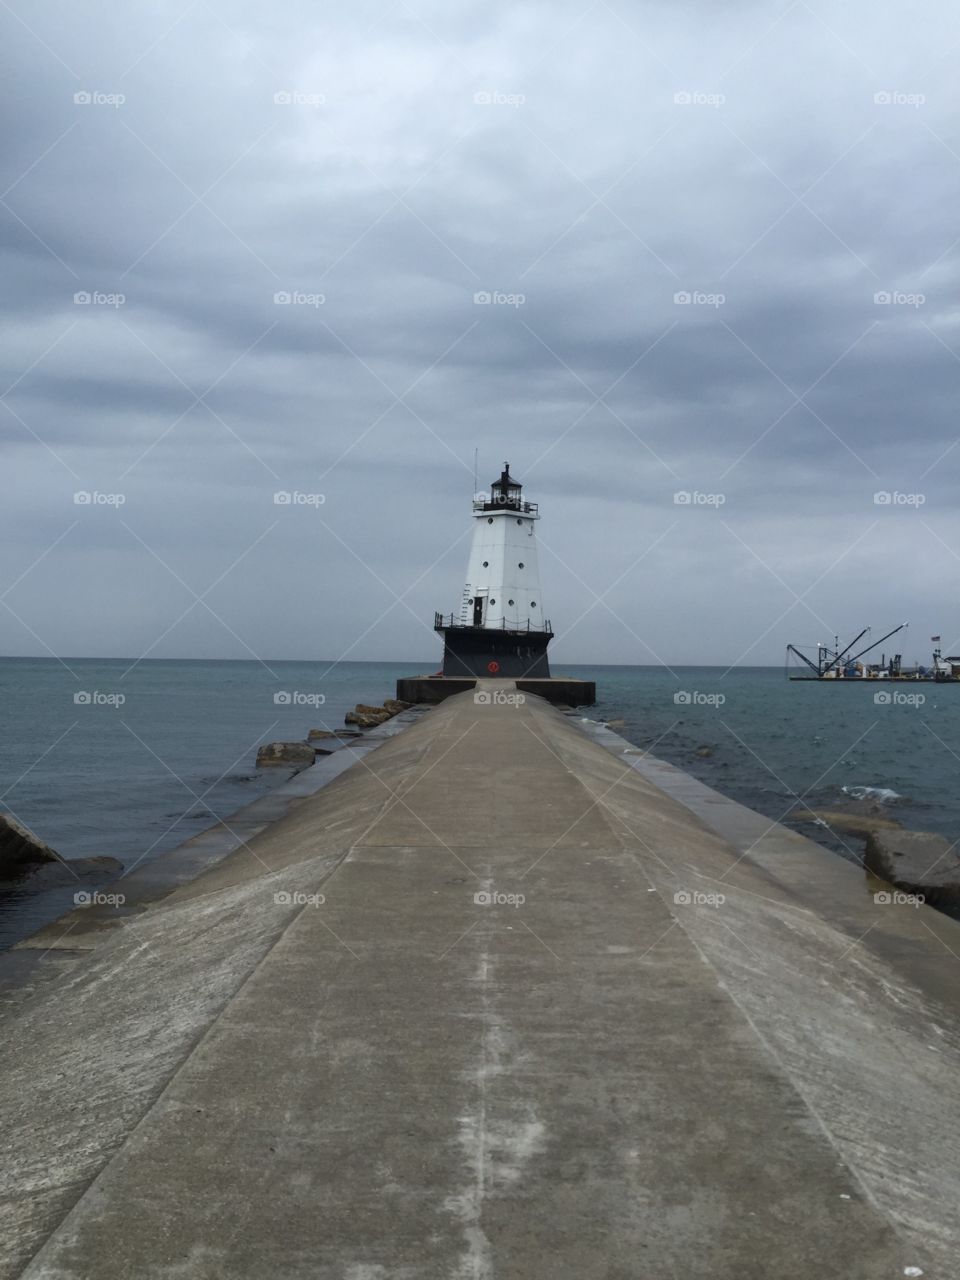 Ludington, MI Lighthouse
2700 ft. Pier to the lighthouse 
7/7/16